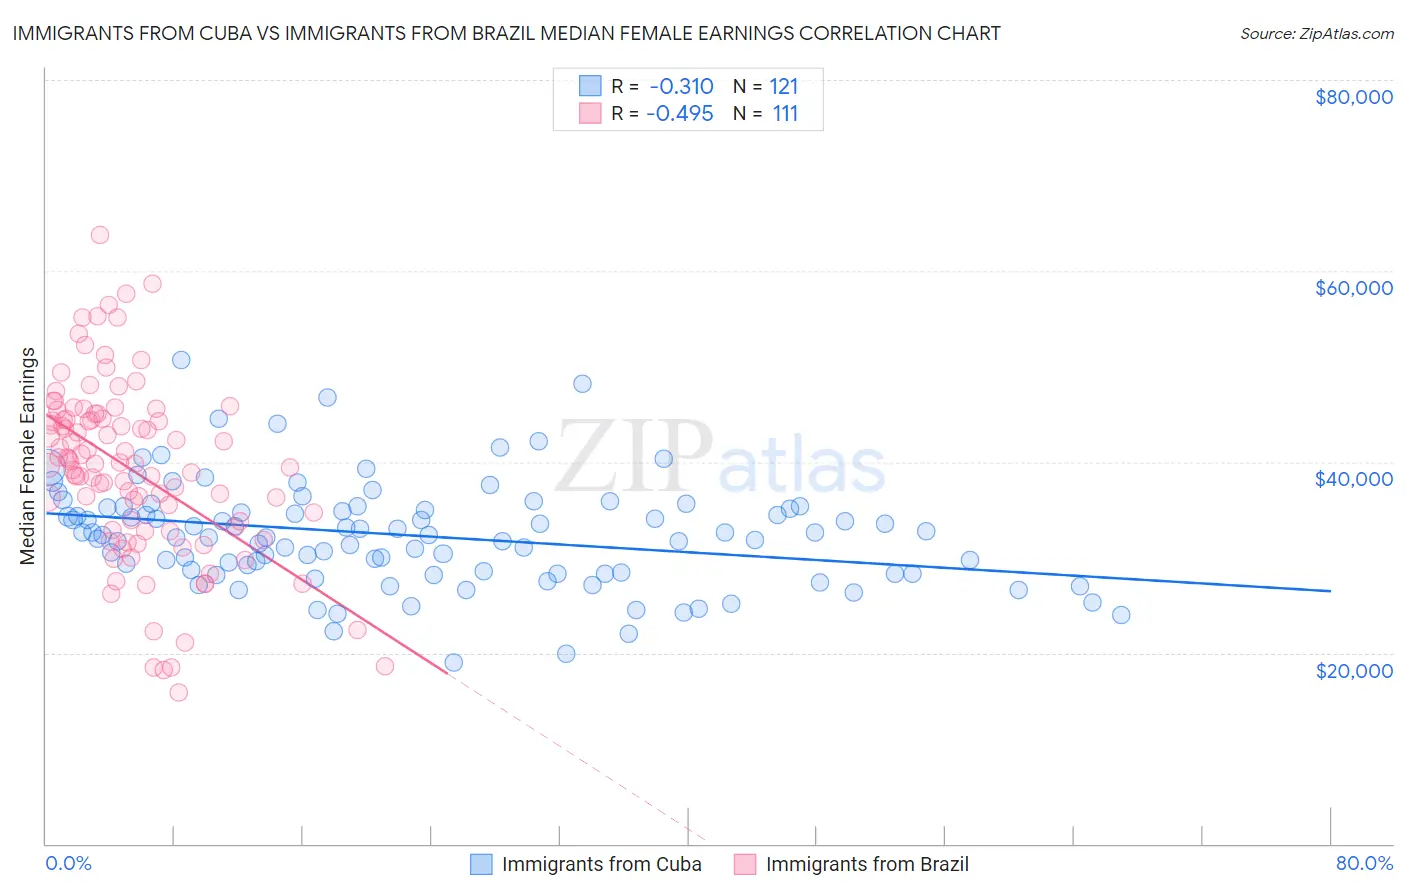 Immigrants from Cuba vs Immigrants from Brazil Median Female Earnings